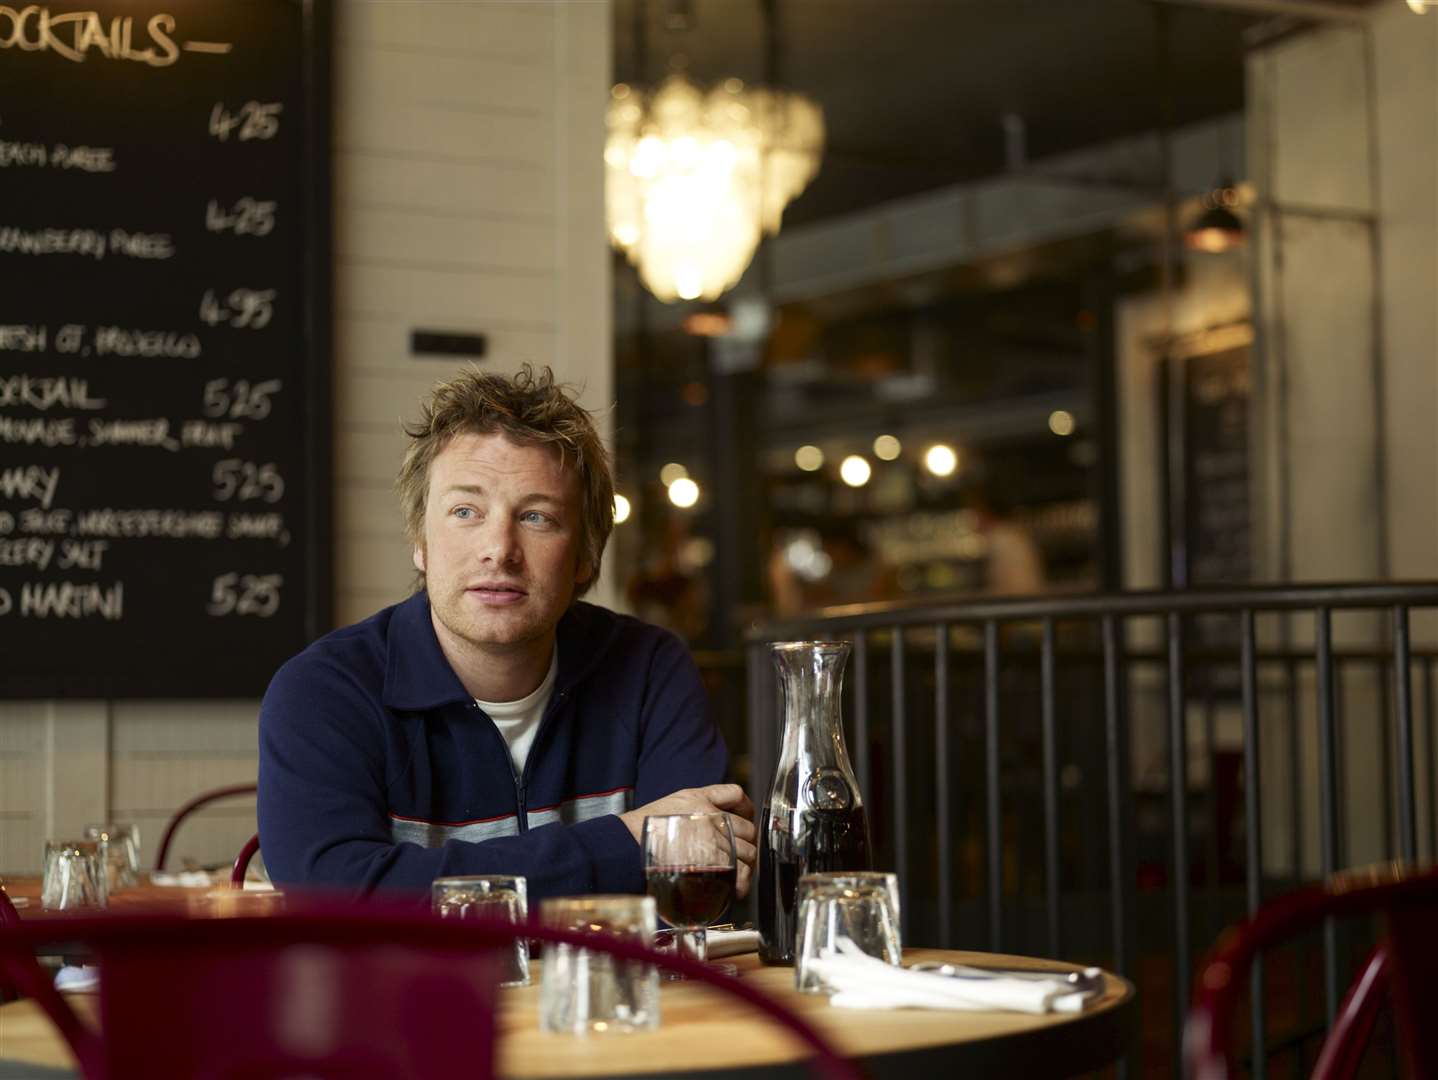 Sad days for the celebrity chef Jamie Oliver